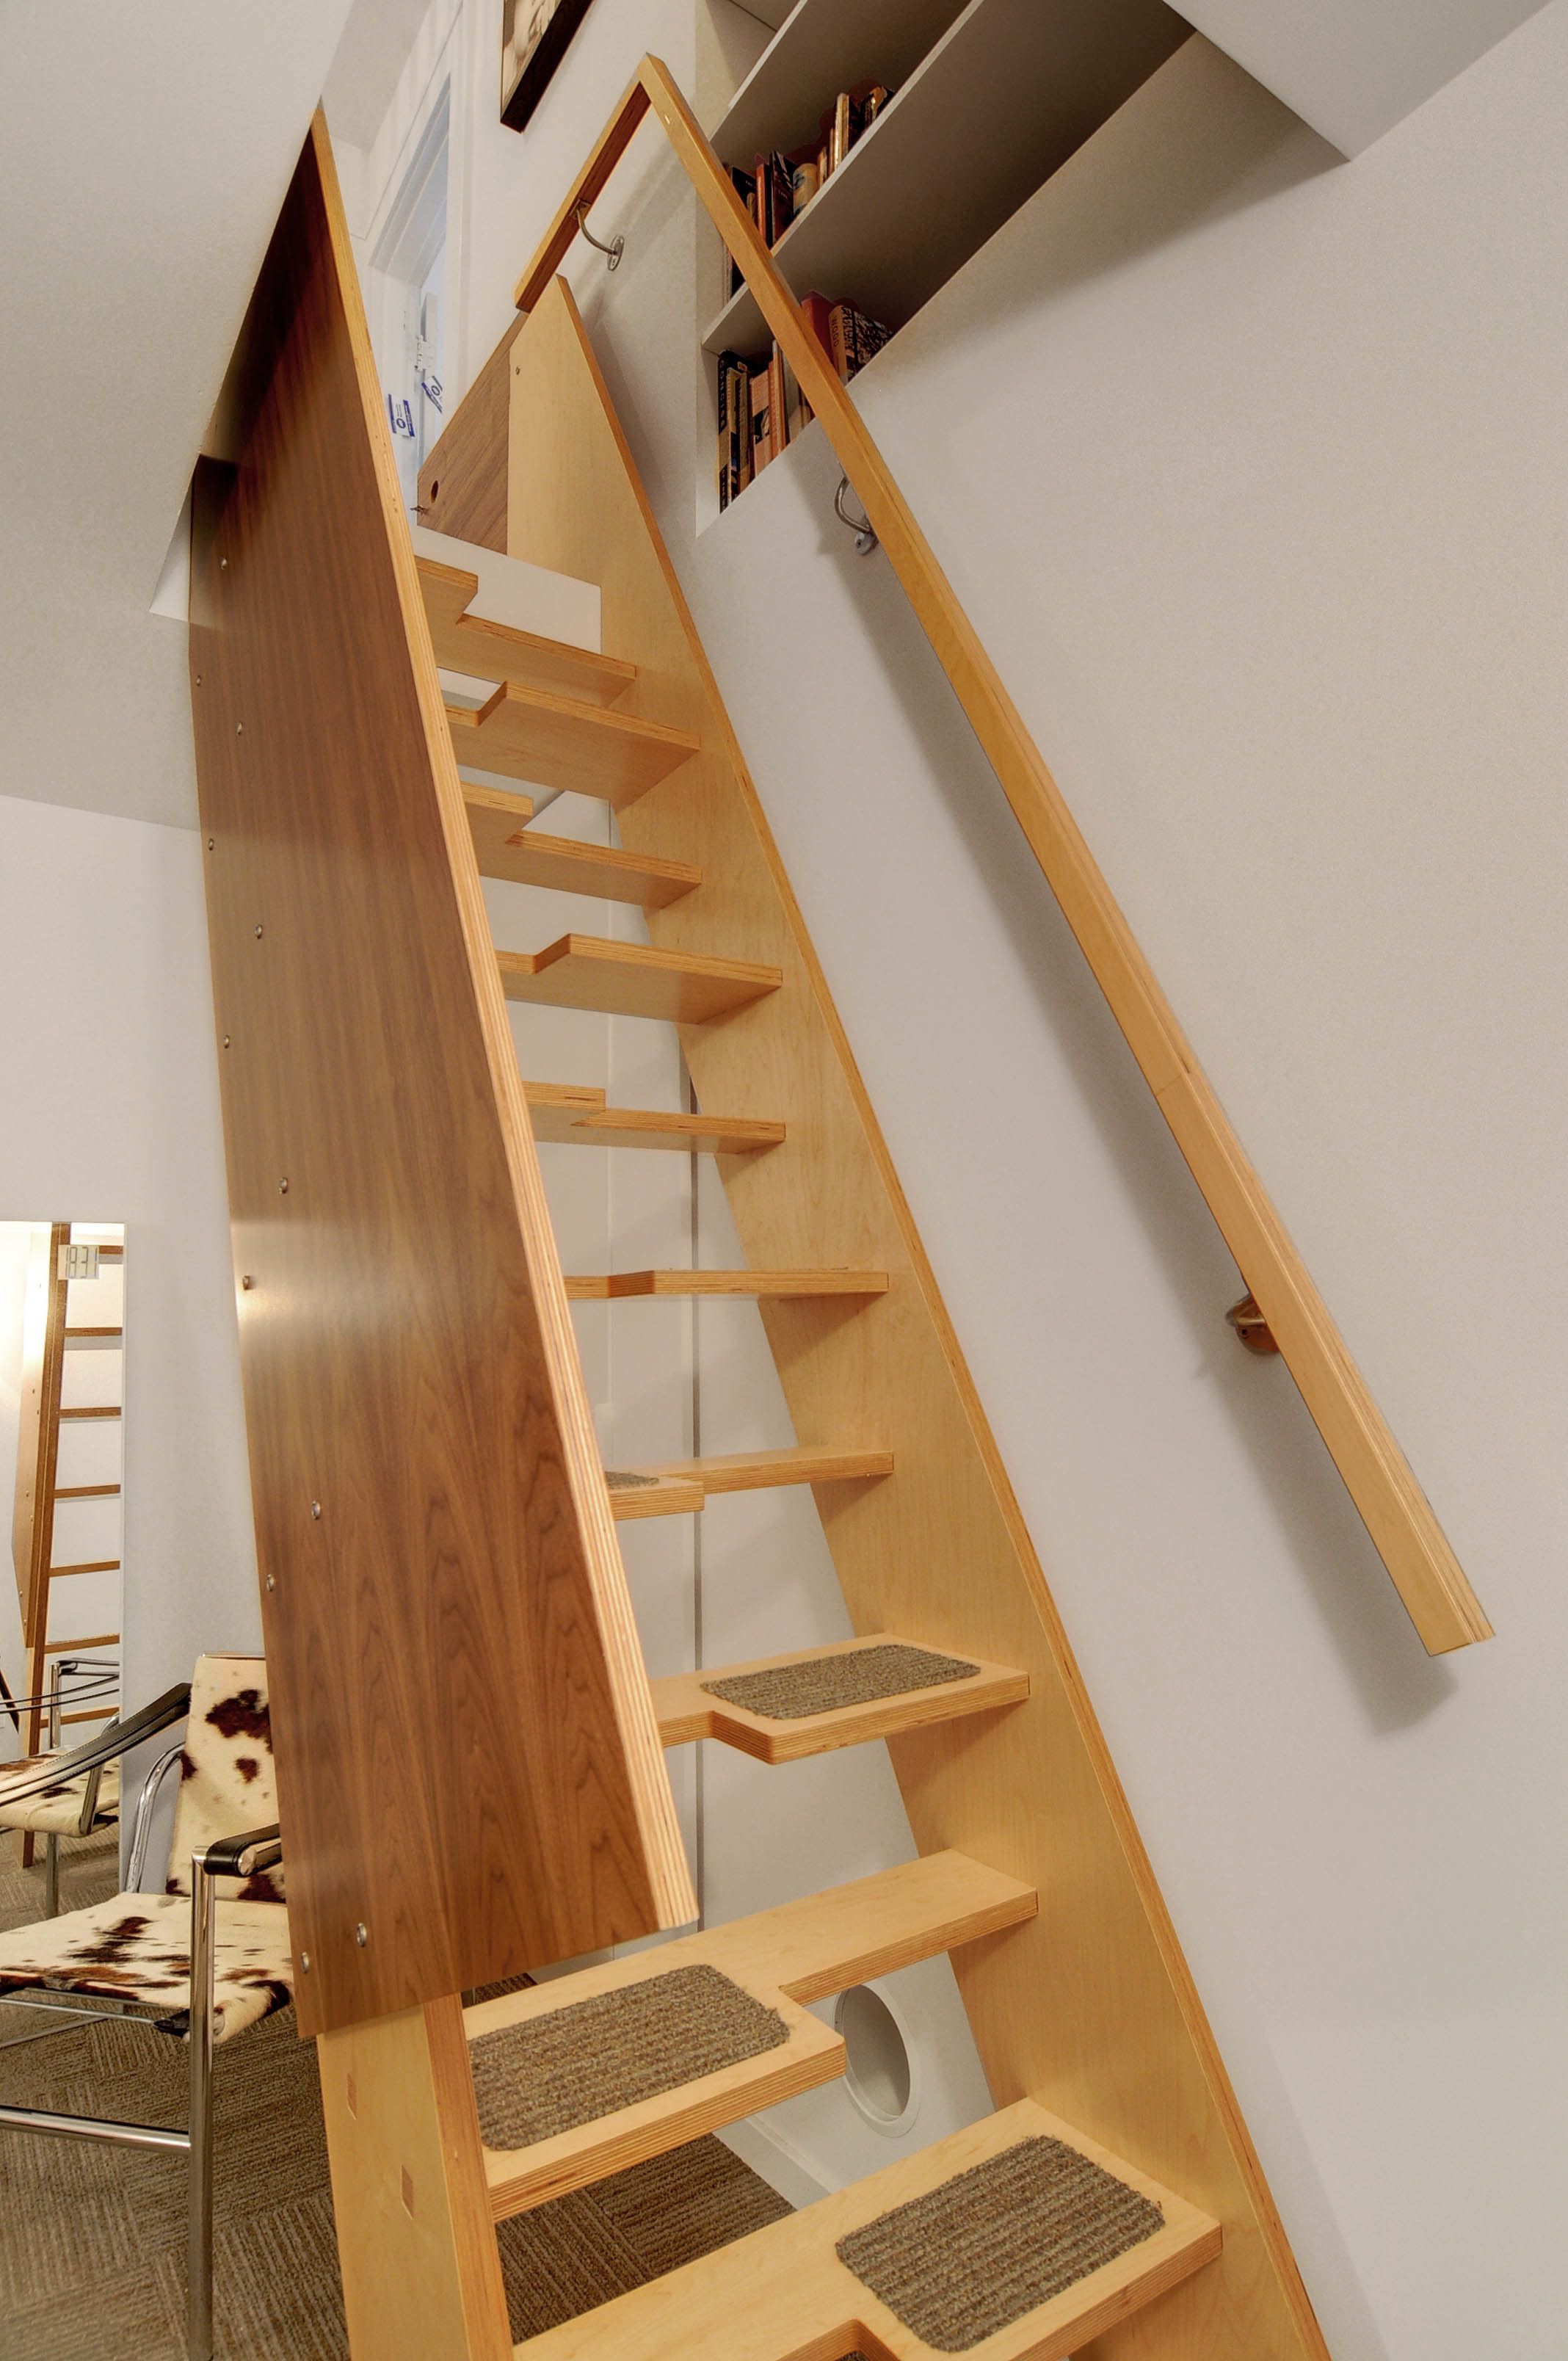 Утиный шаг лестница: Лестница гусиный шаг, конструкция типа «утиный шаг», мотыльковая лестница